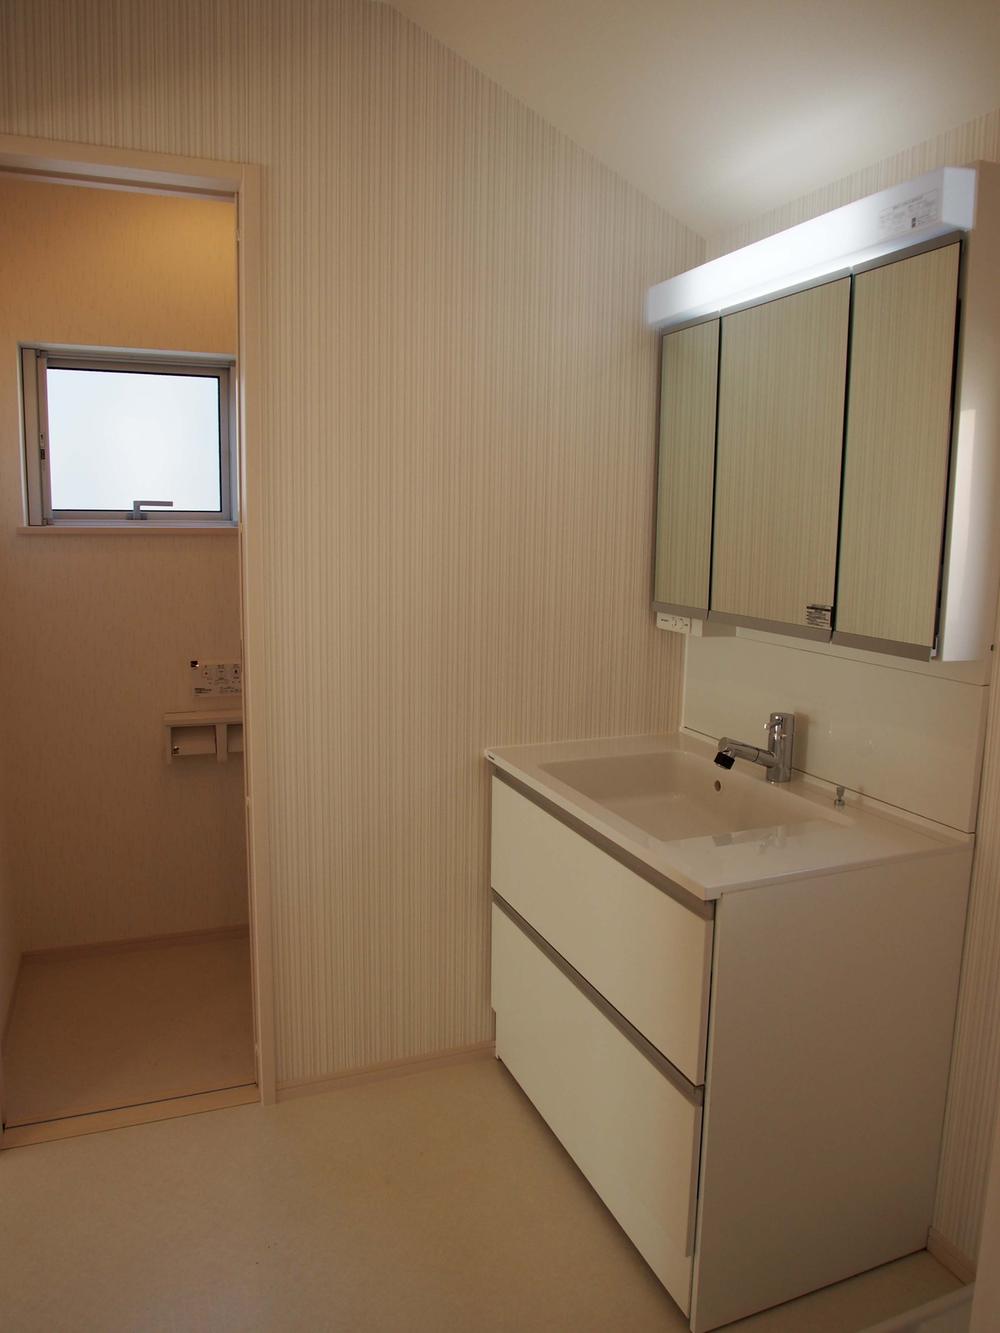 Wash basin, toilet. Wide 90 cm vanity